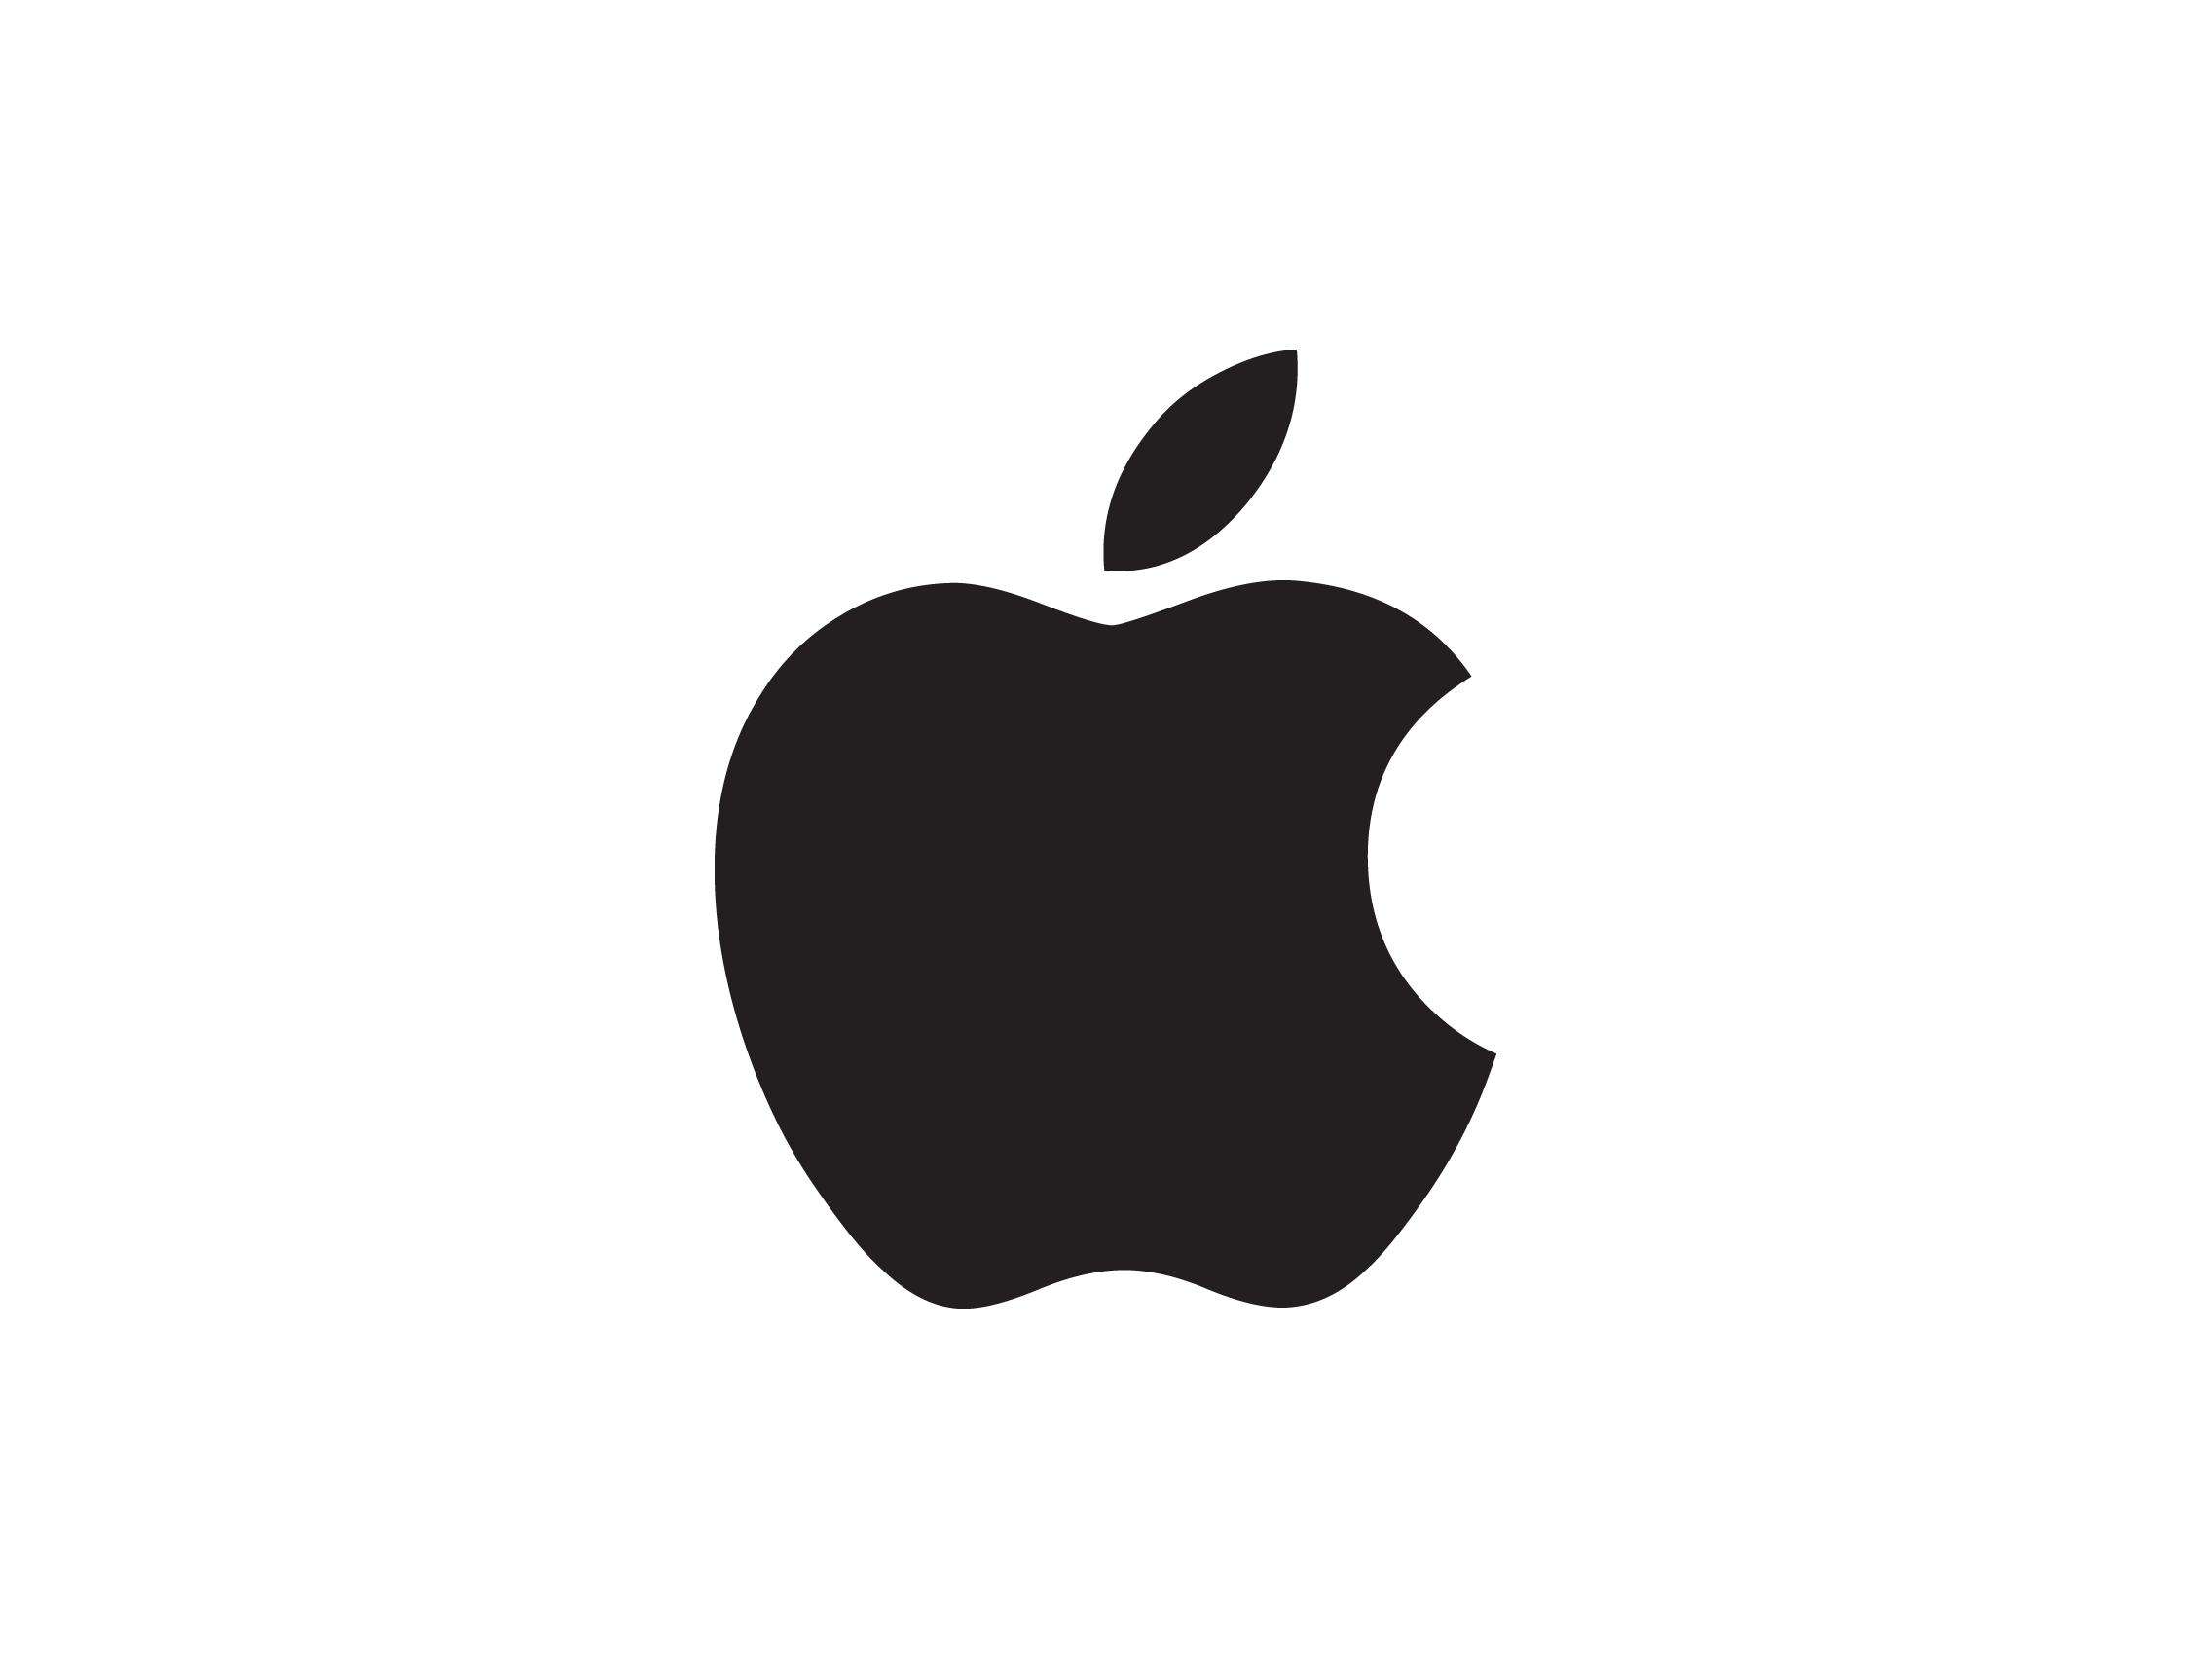 Iphone 6 Plus Macintosh Applecare Technical Support Ipad Apple Logo